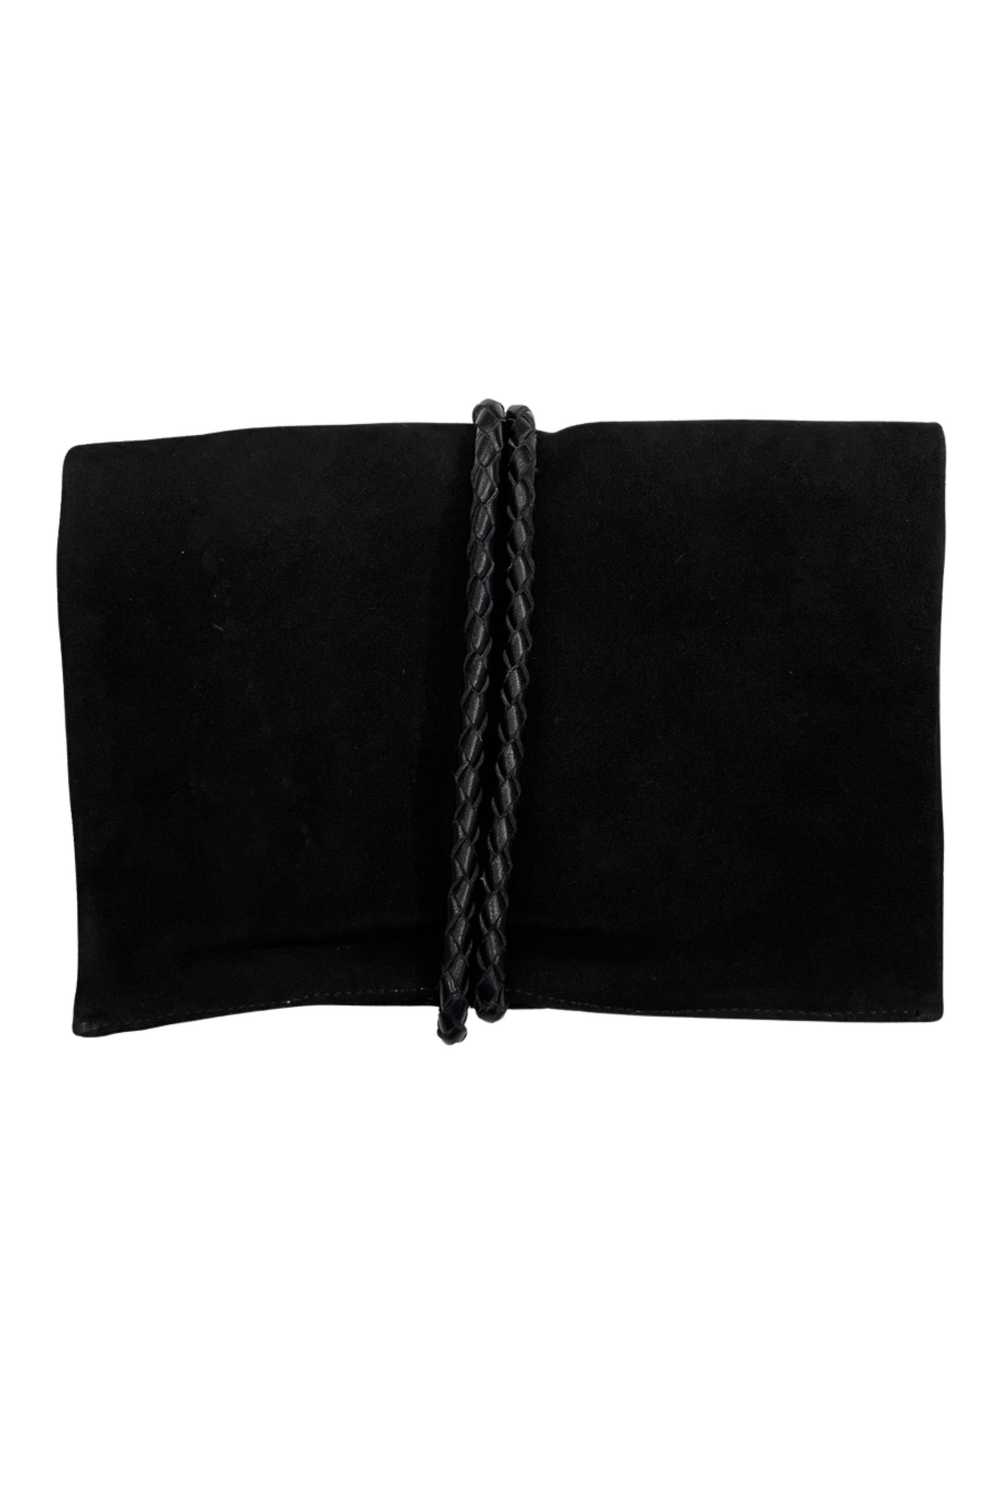 HELMUT LANG BLACK SUEDE FOLD OVER CLUTCH BAG WITH… - image 3